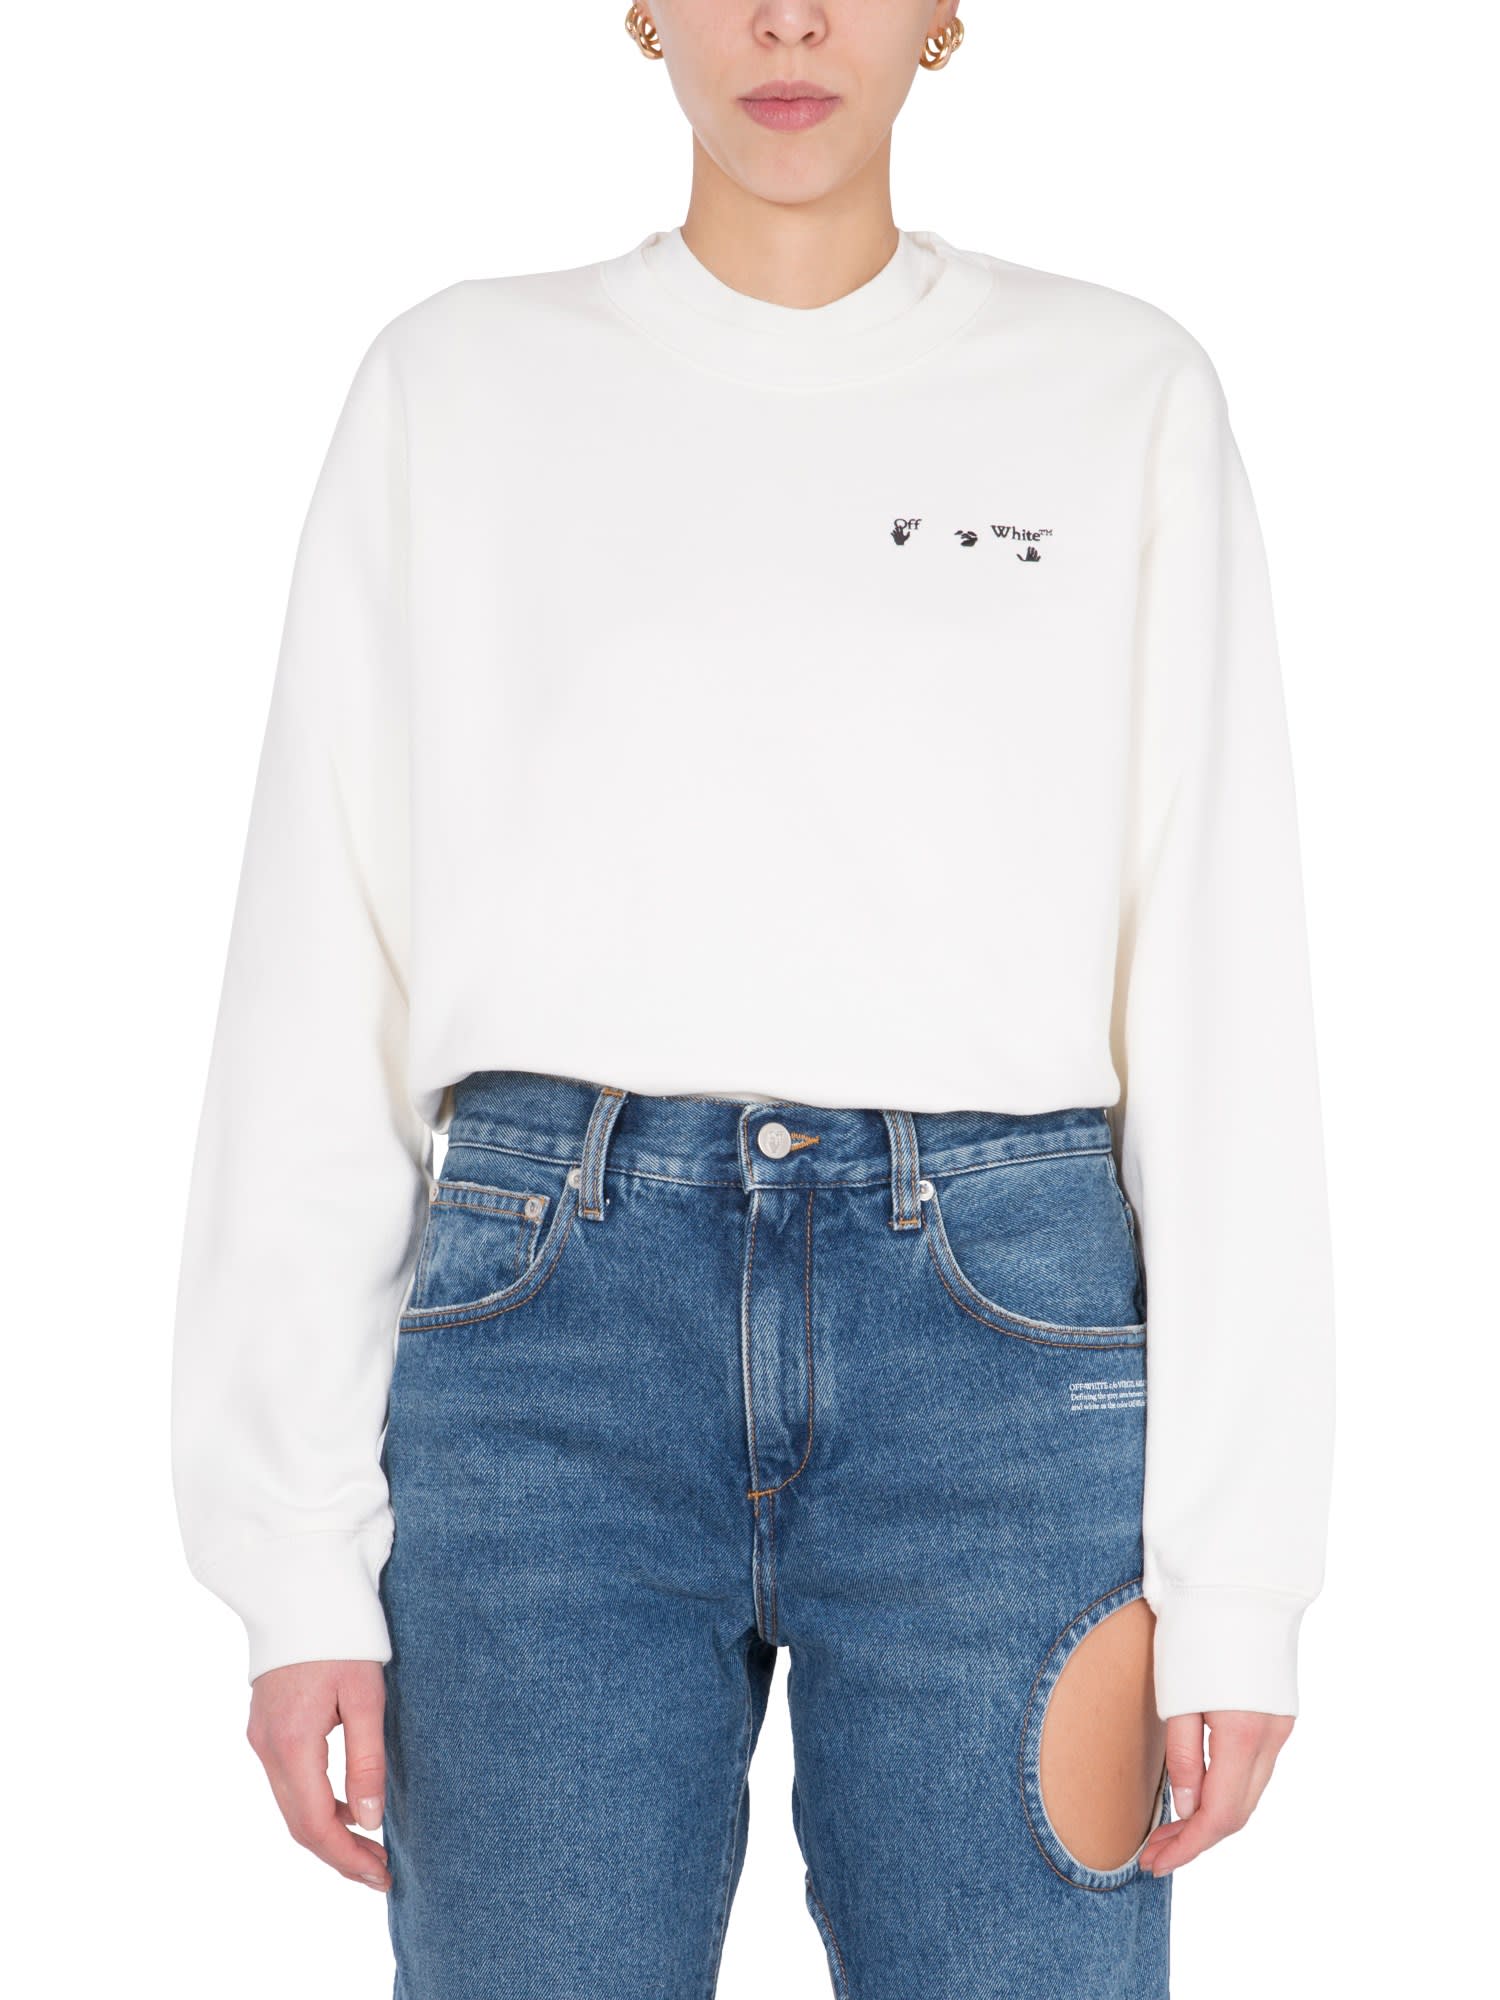 Off-White Sweatshirt With Arrow Print